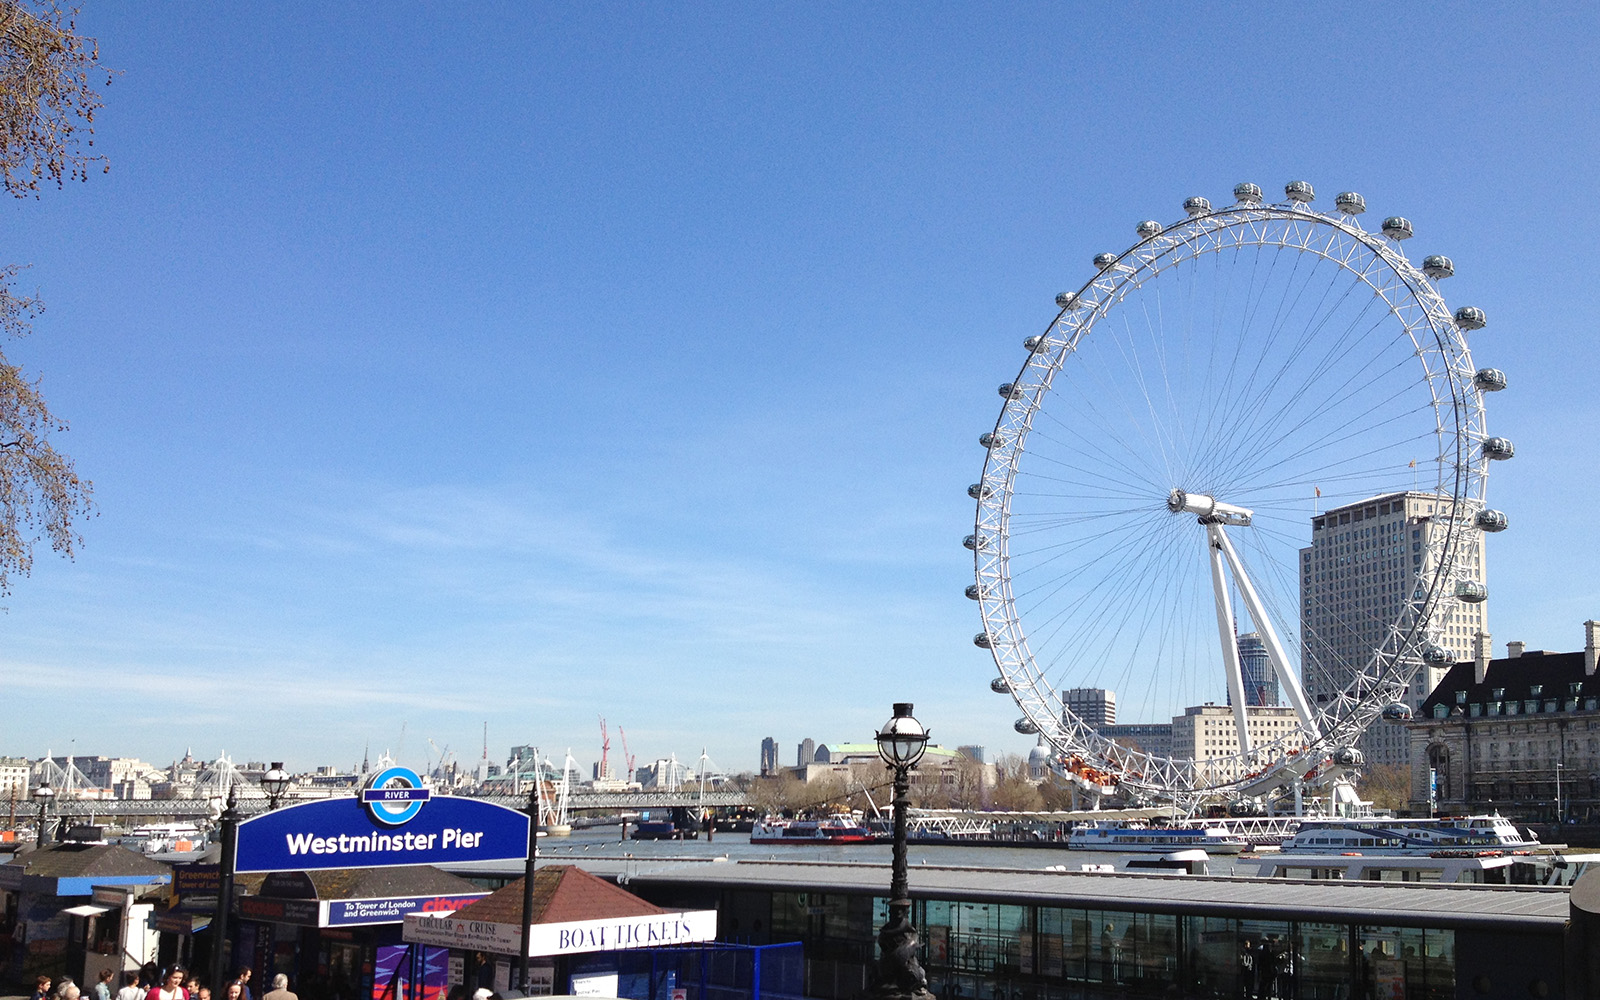 The London Eye photos